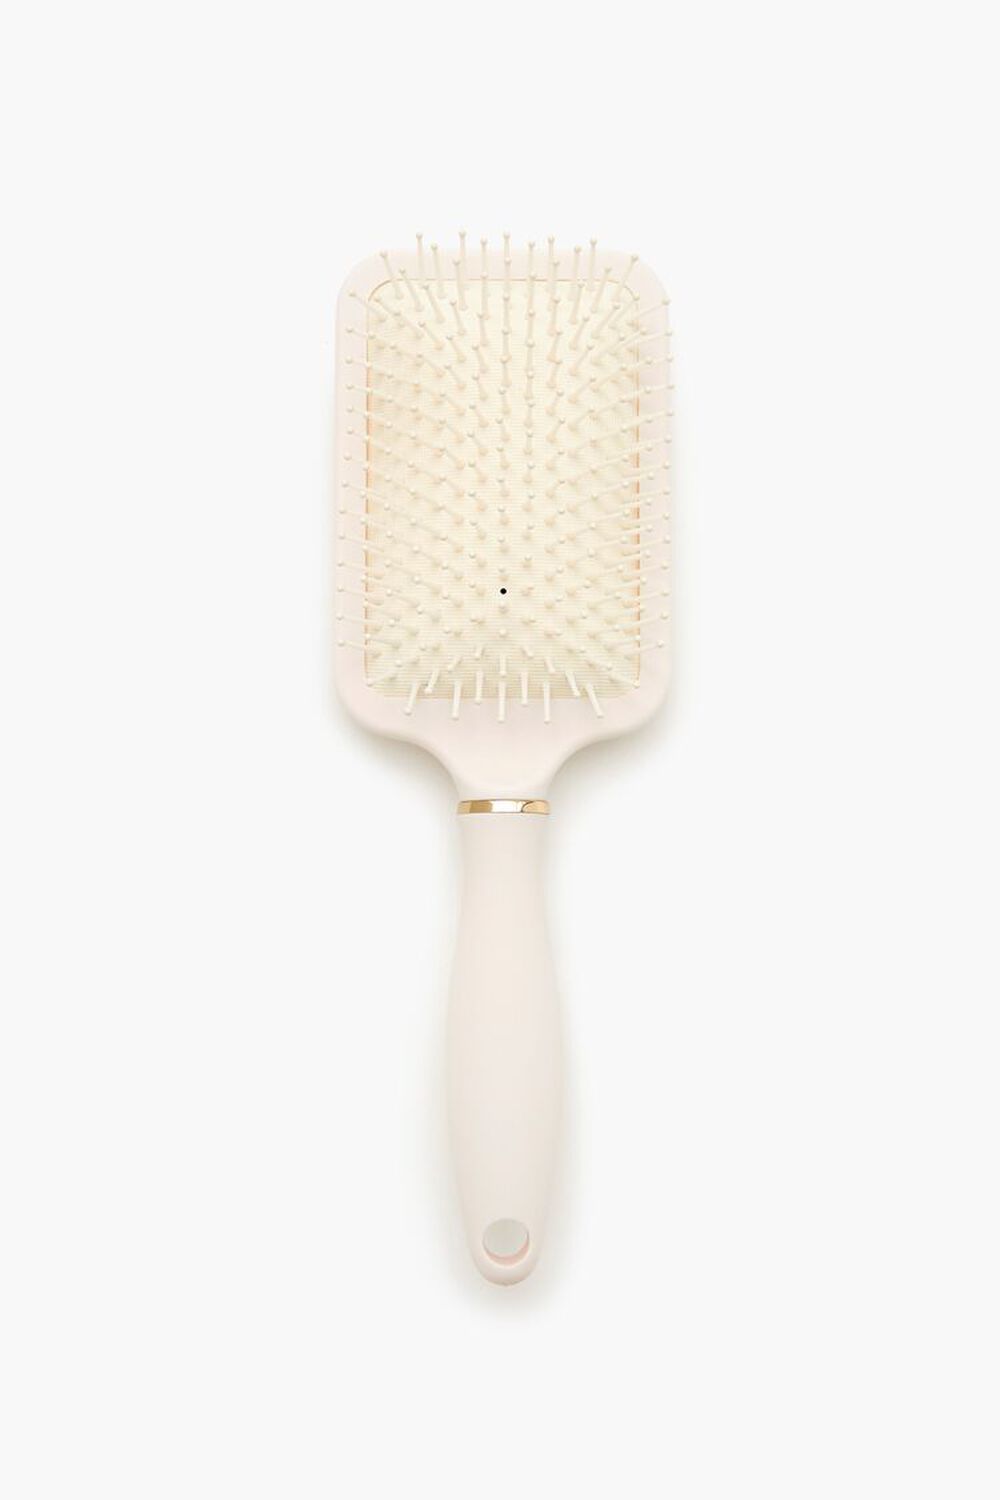 CREAM/ROSE GOLD Square Paddle Hair Brush, image 1